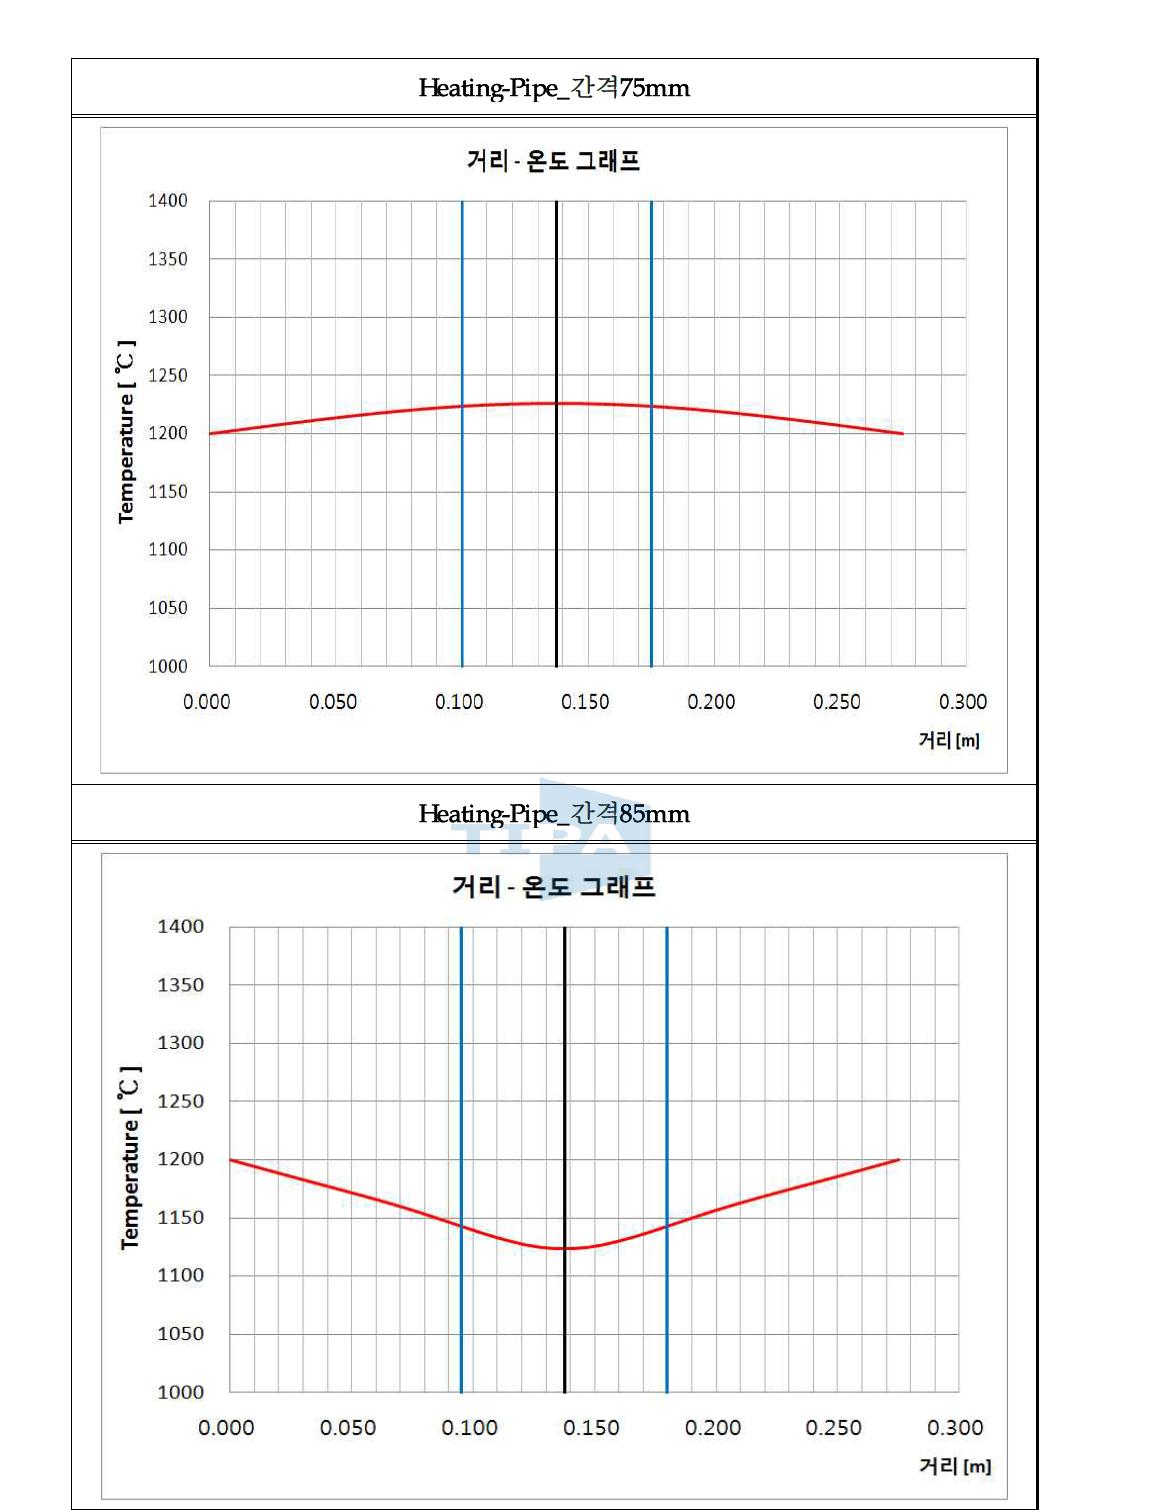 Heating-Pipe의 간격에 따른 Chamber 내부 온도 분포 그래프